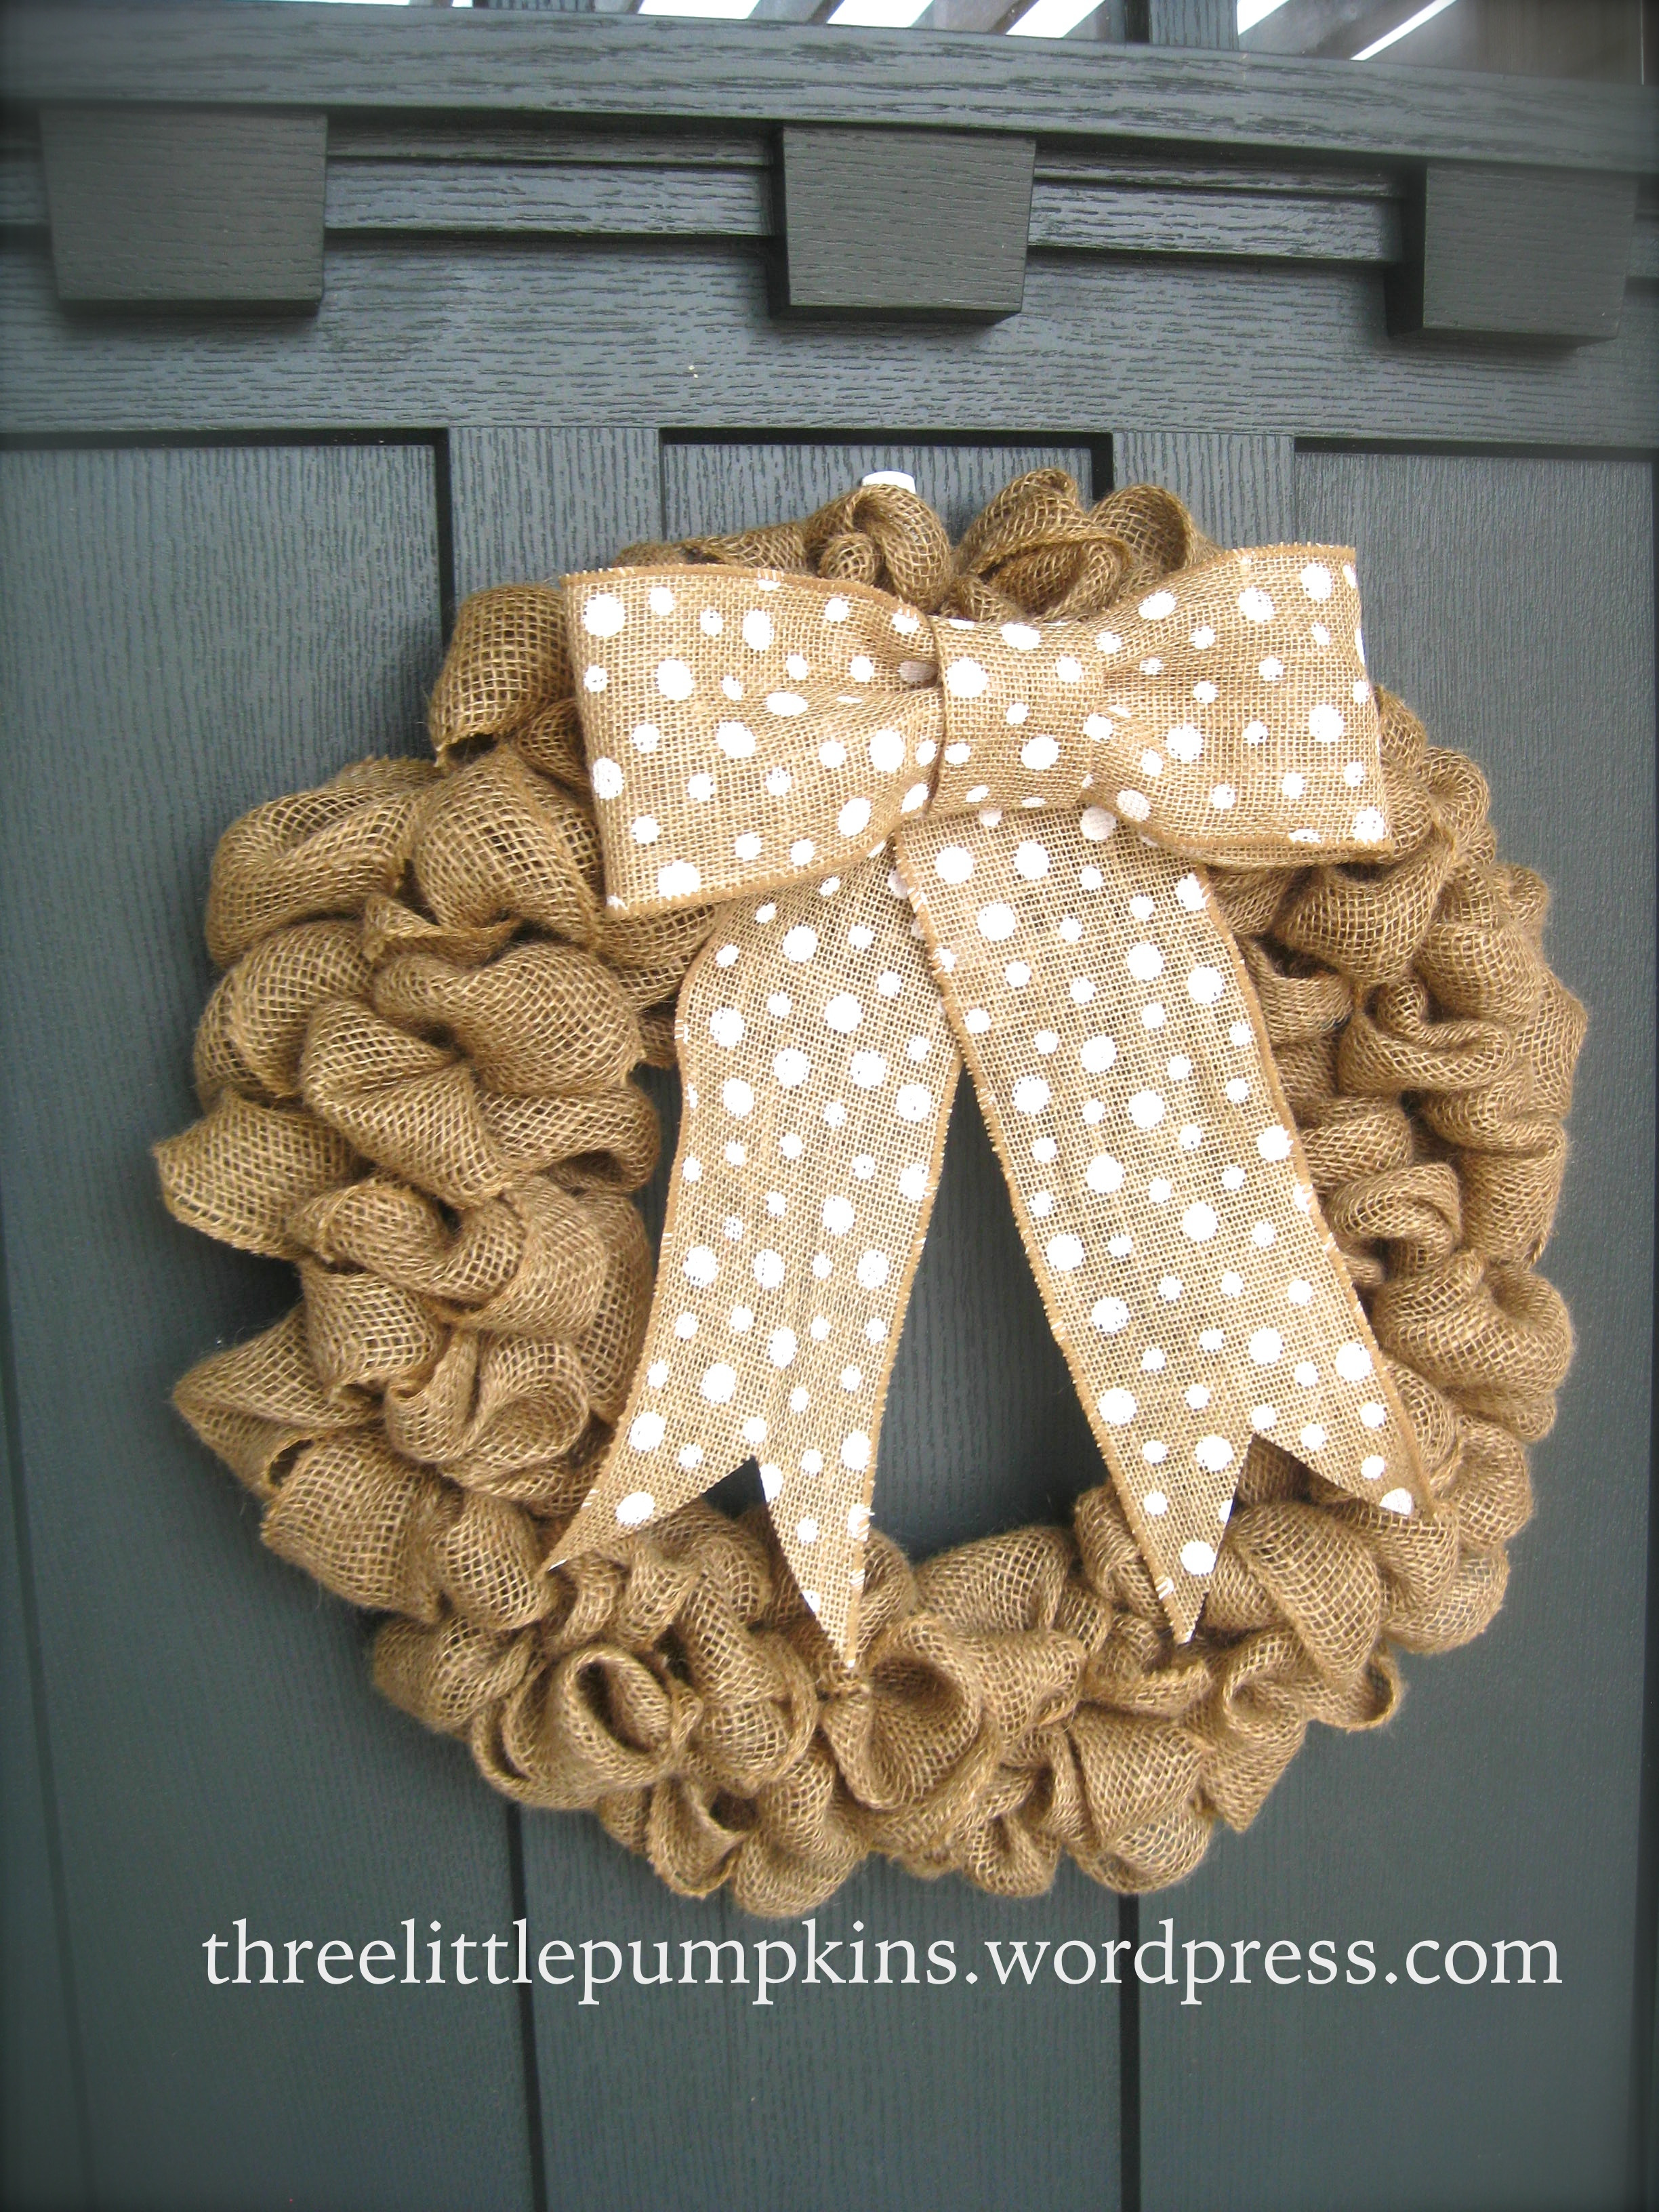 Best ideas about DIY Burlap Wreath
. Save or Pin DIY Burlap Wreath Now.